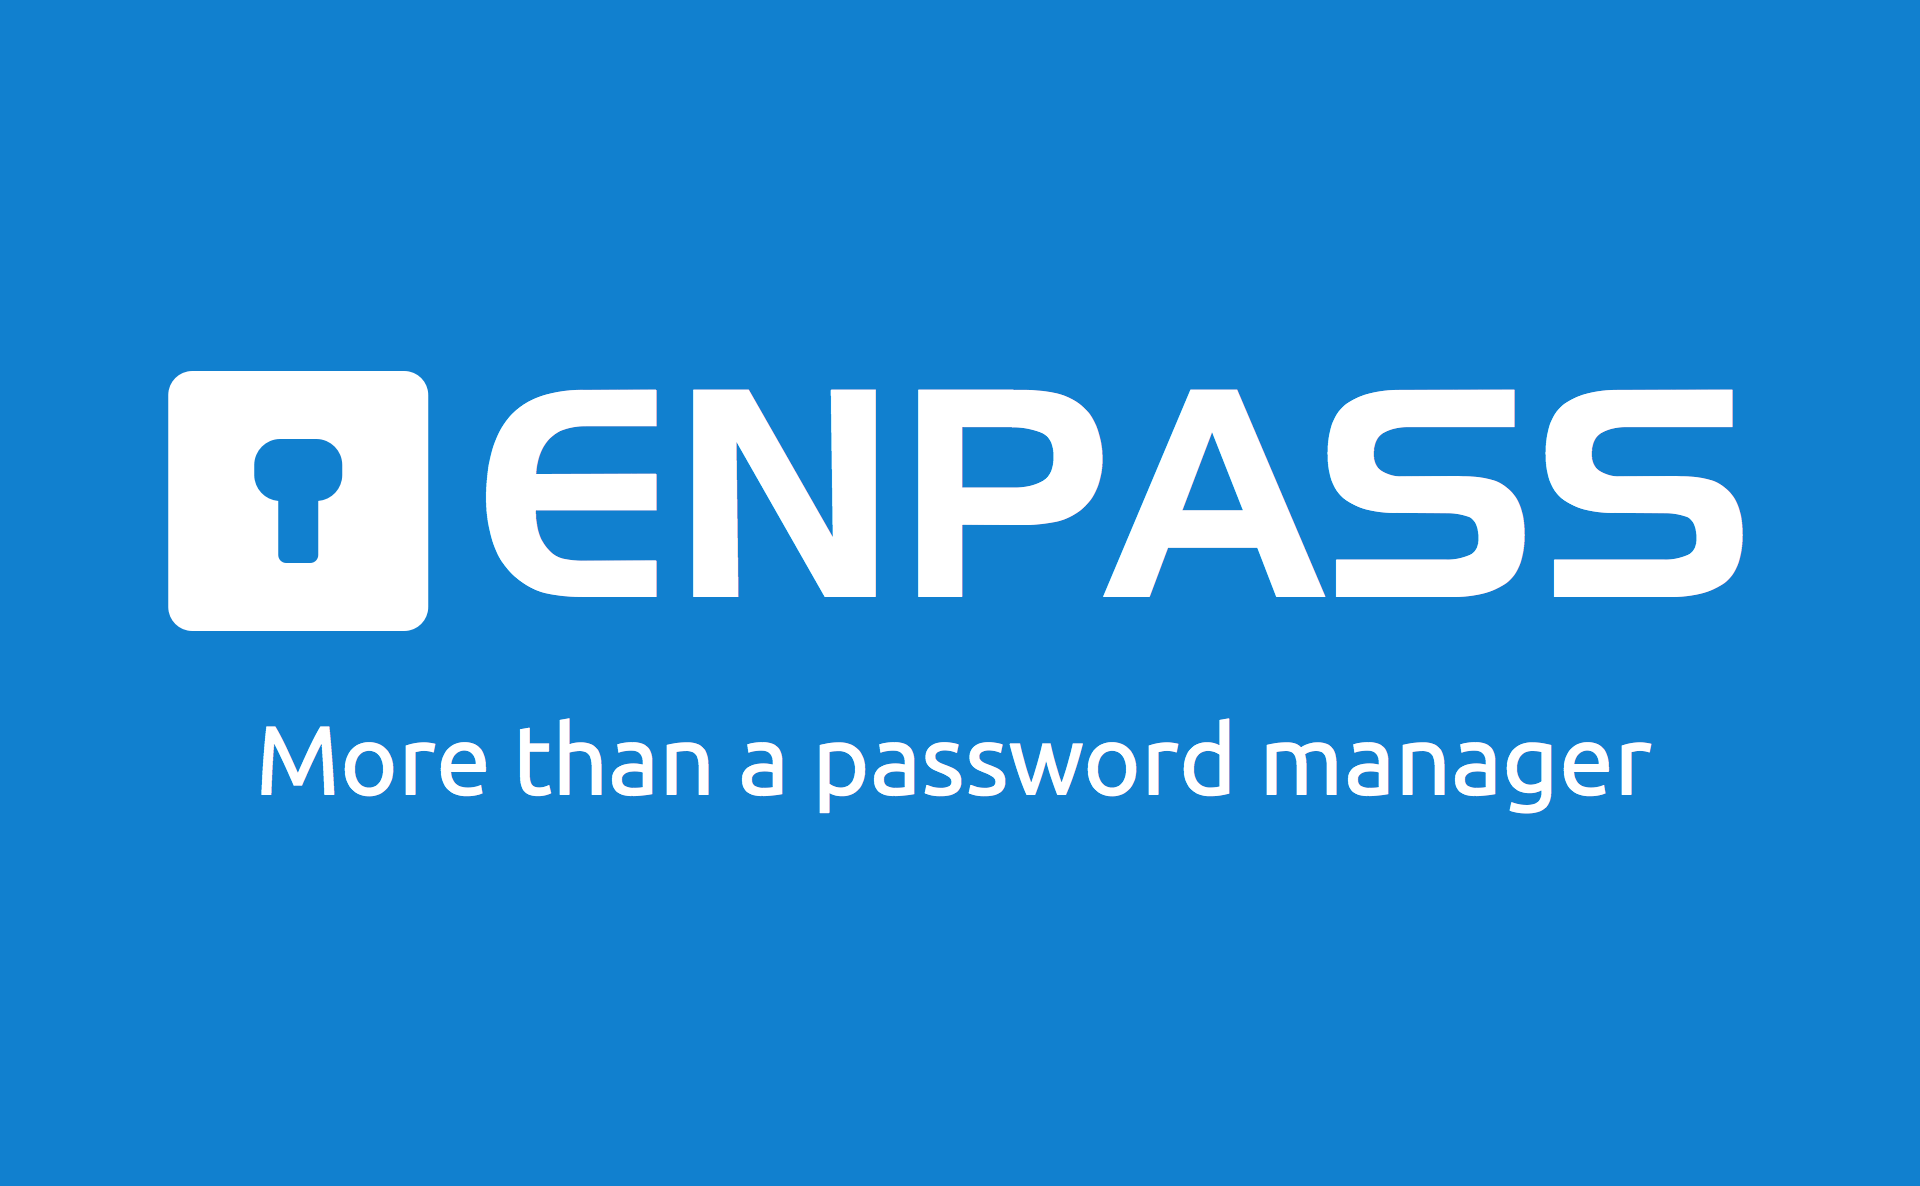 enpass logo and text